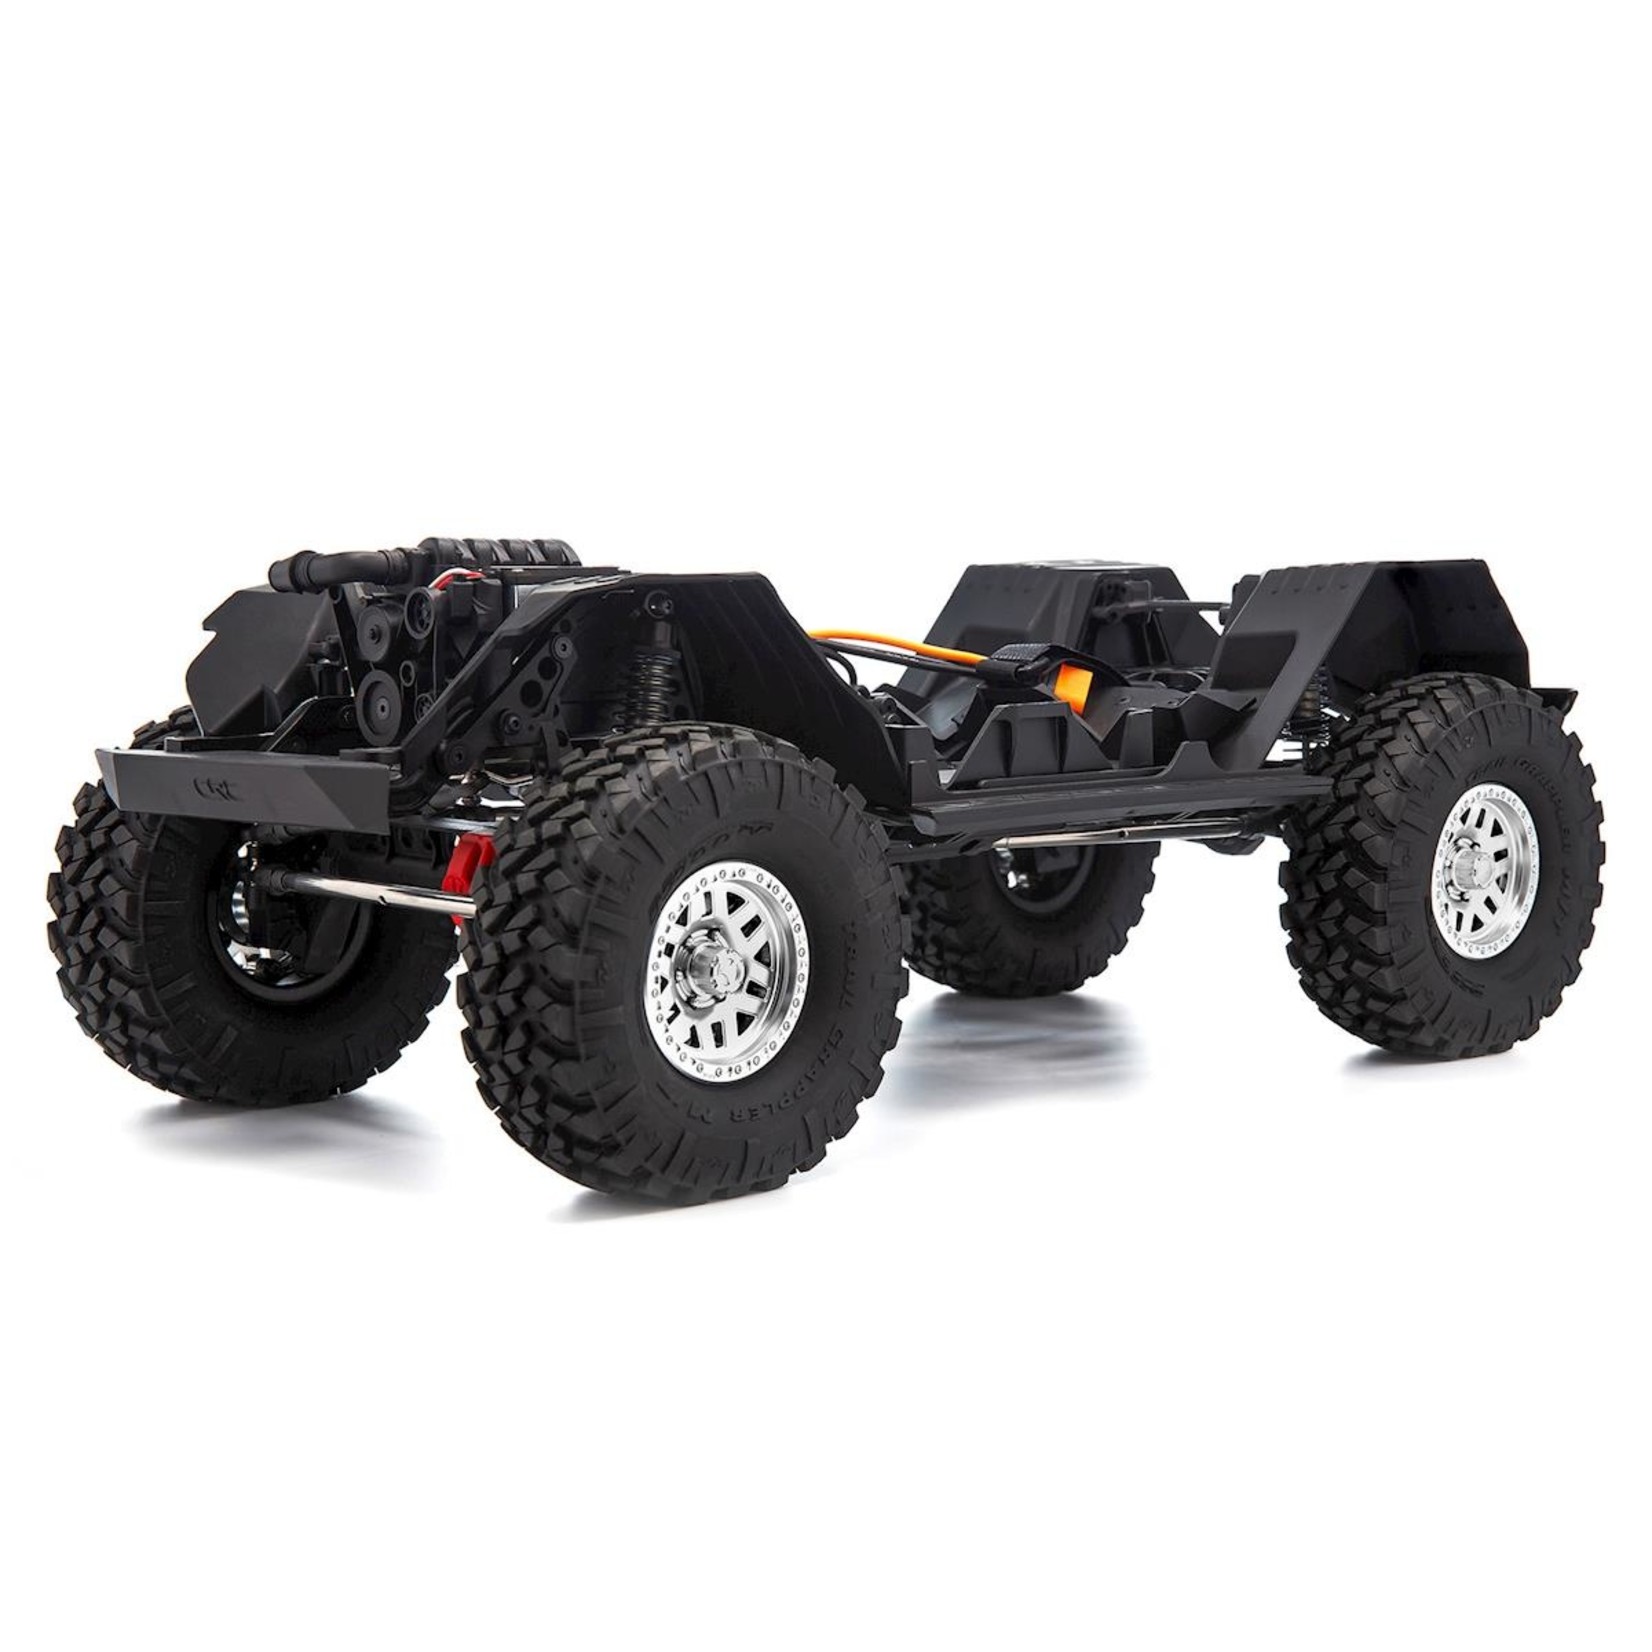 Axial Axial SCX10 III "Jeep JLU Wrangler" RTR 4WD Rock Crawler (Grey) w/Portals & DX3 2.4GHz Radio #AXI03003T1